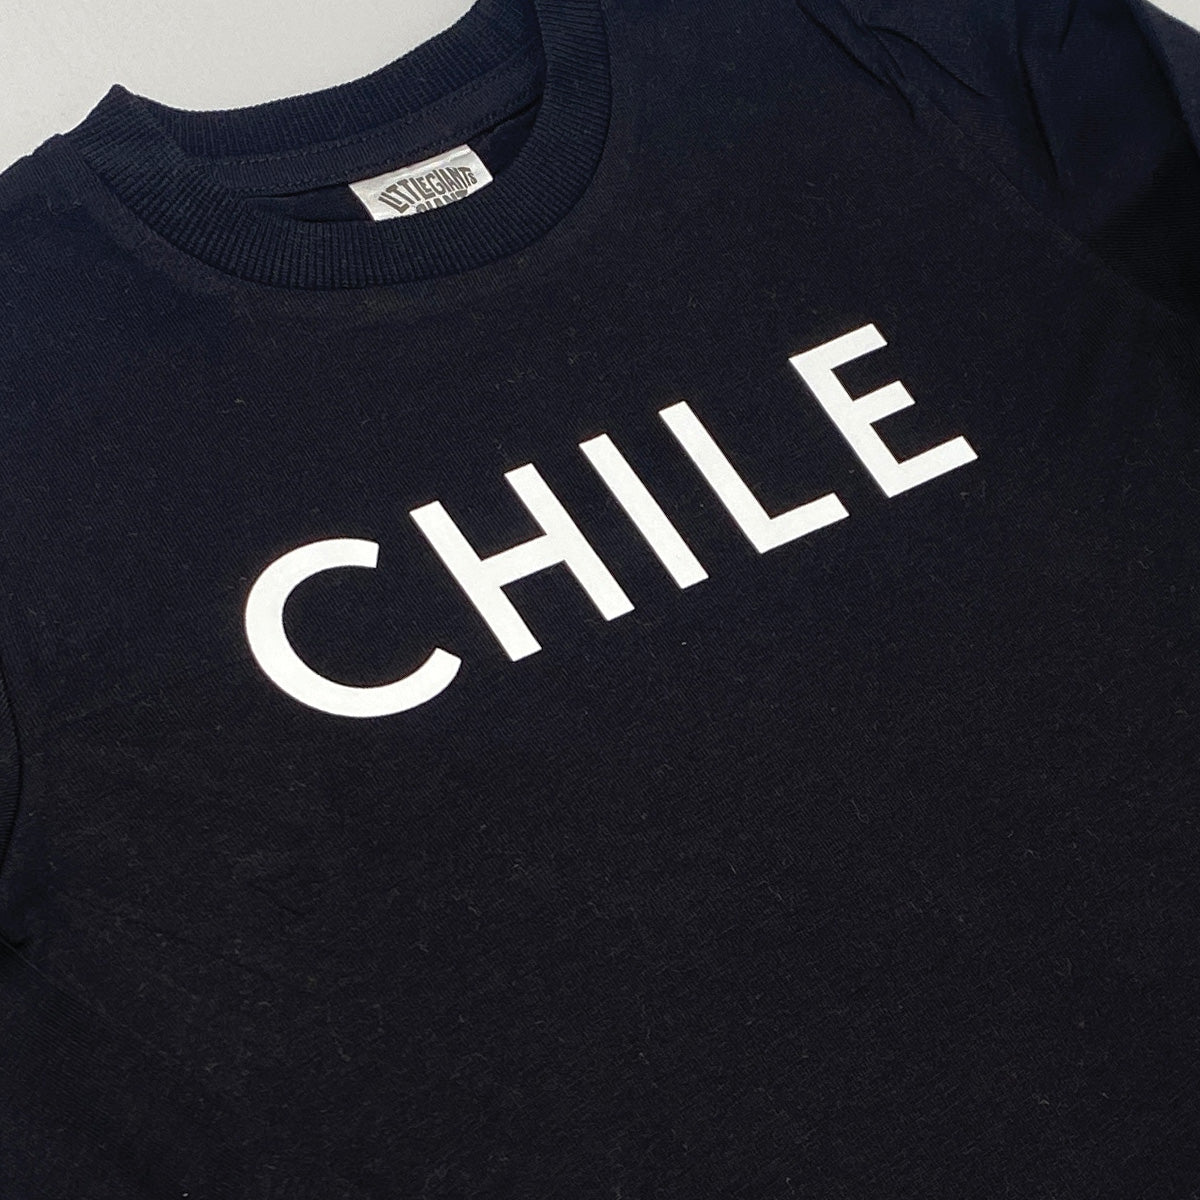 CHILE Long T-Shirt (Black)